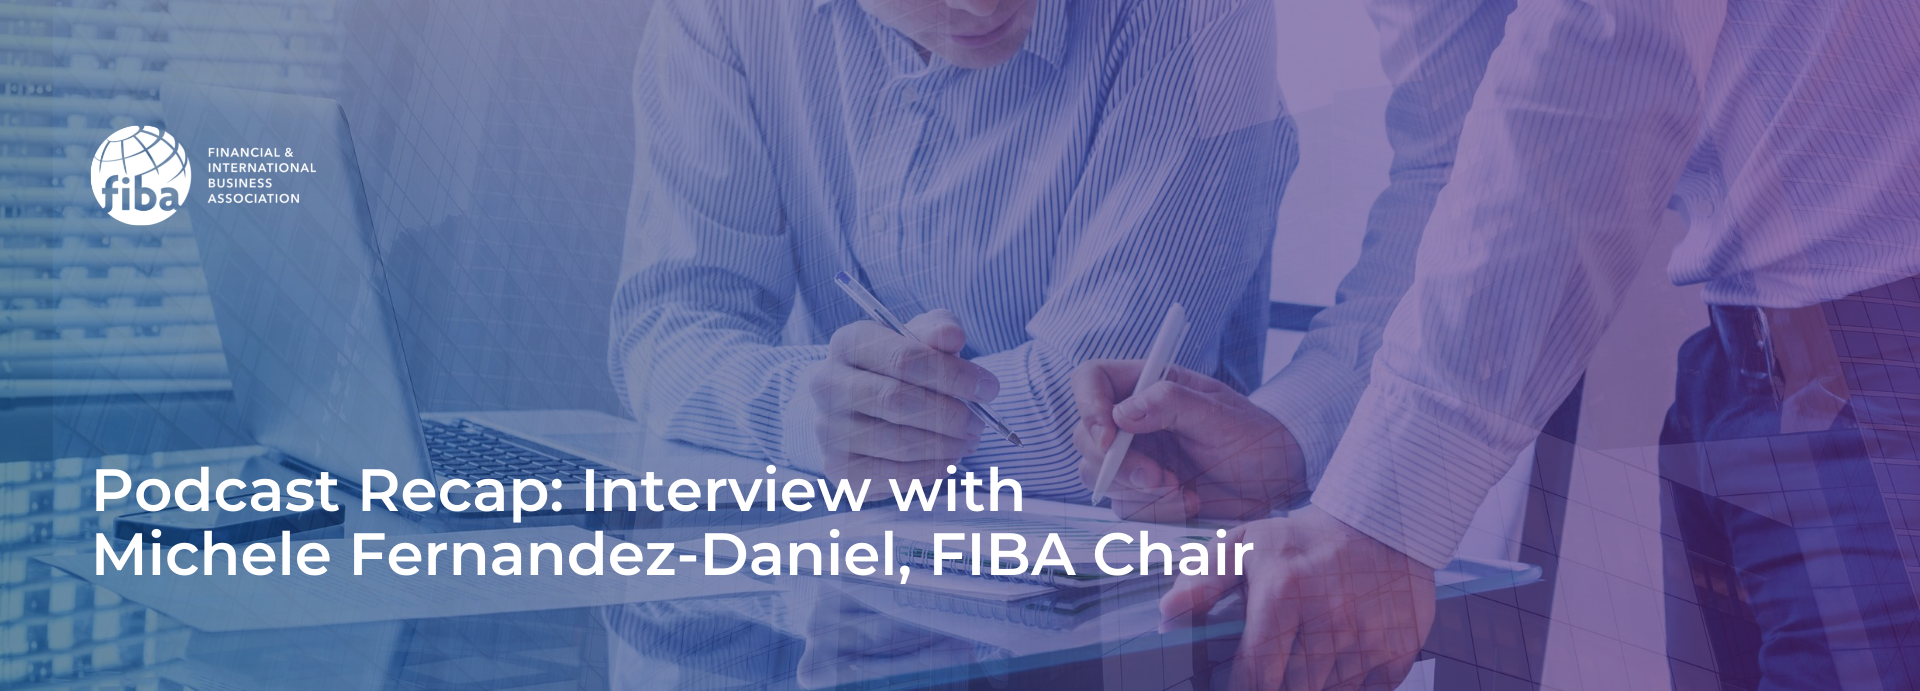 Podcast Recap: Interview with Michele Fernandez-Daniel, FIBA Chair